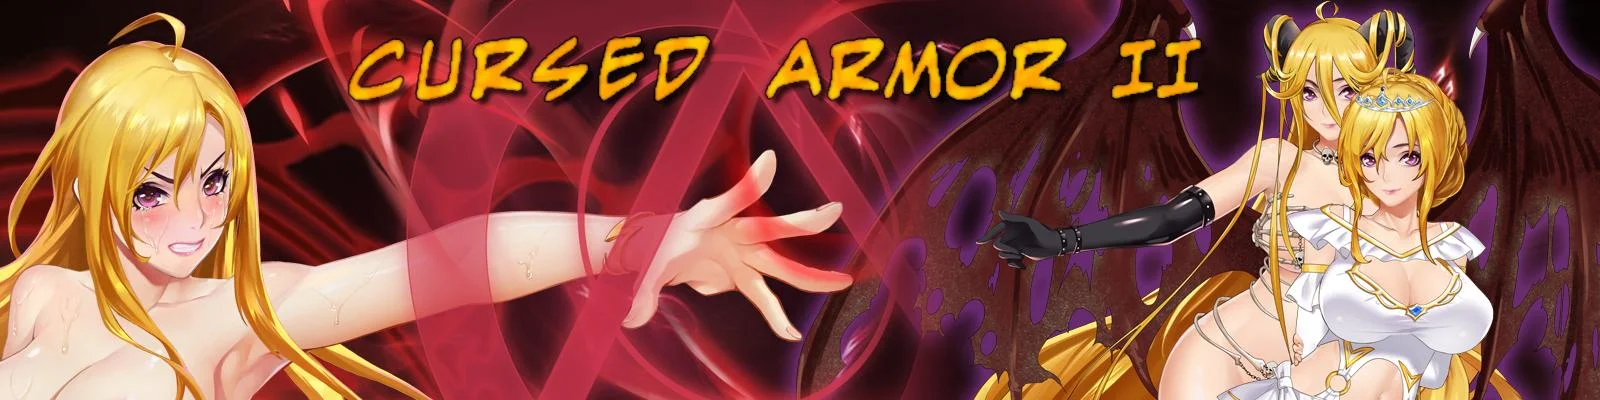 Cursed Armor II v.2.2